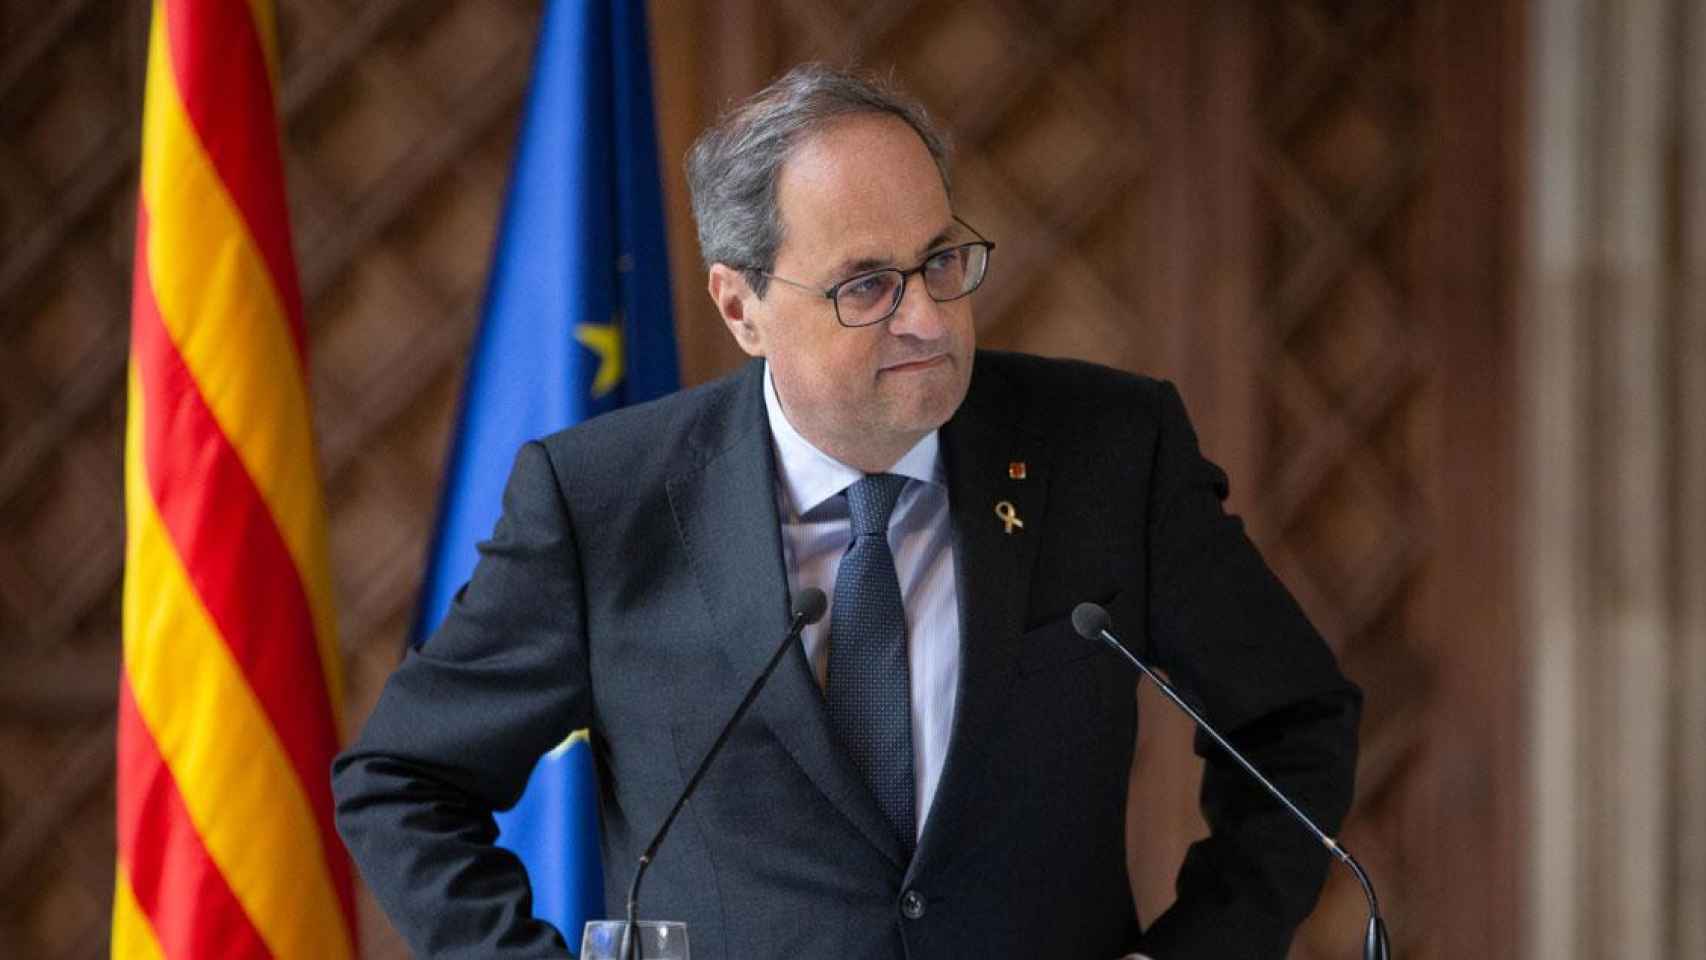 El presidente del Govern, Quim Torra, en el Palau de la Generalitat / EUROPA PRESS